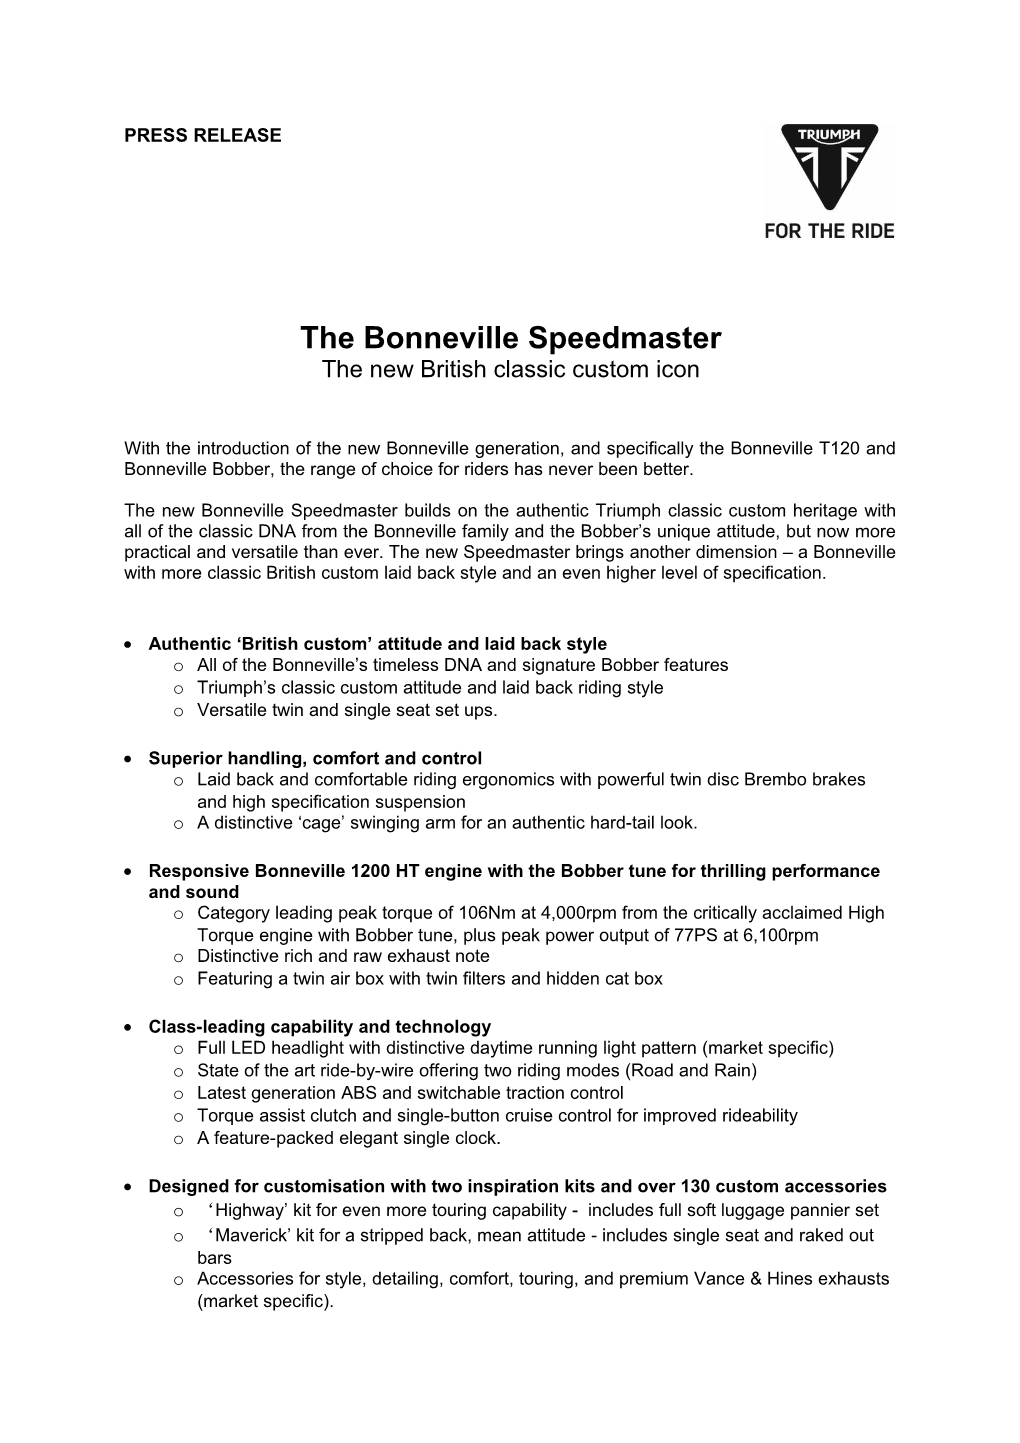 The Bonneville Speedmaster